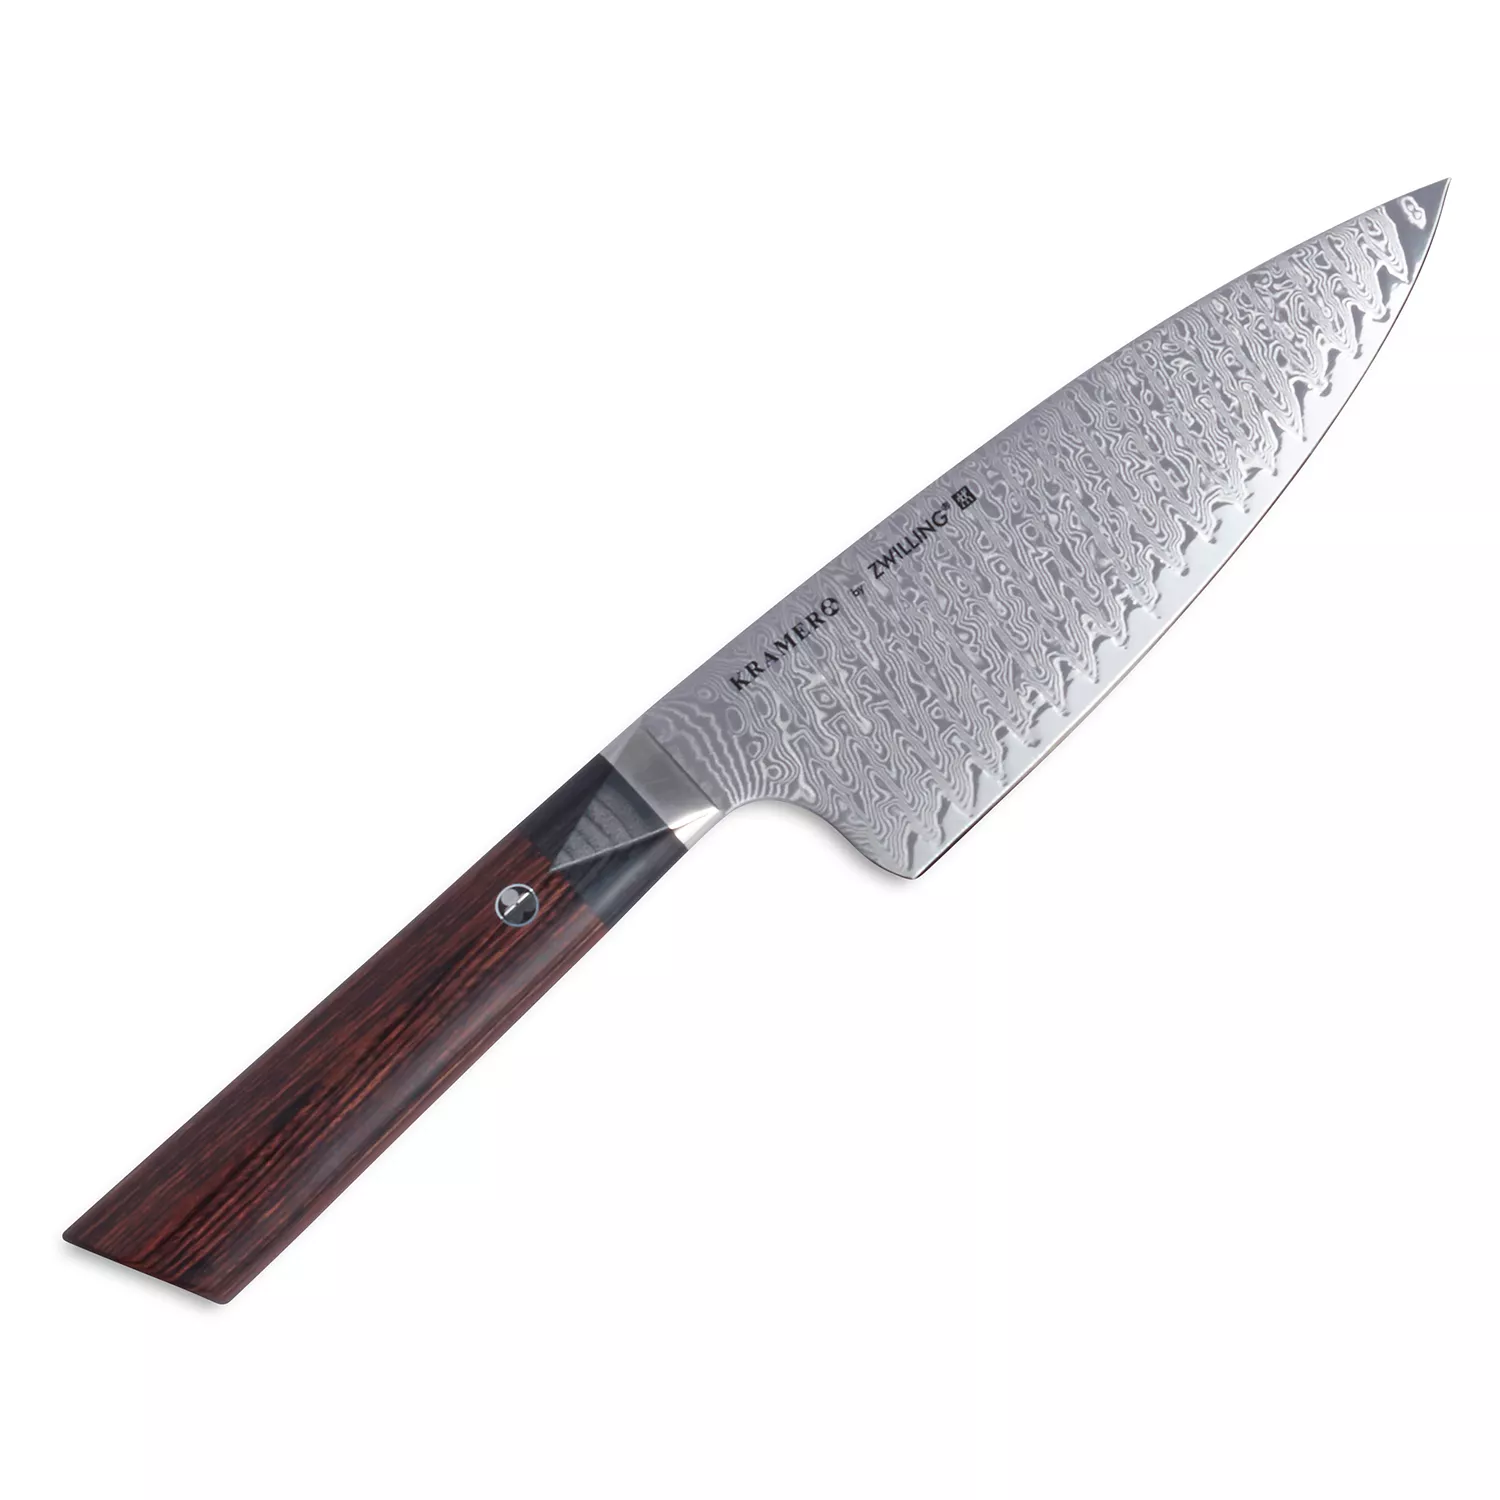 Henckels Knives Review, Are Henckels Knives Good?